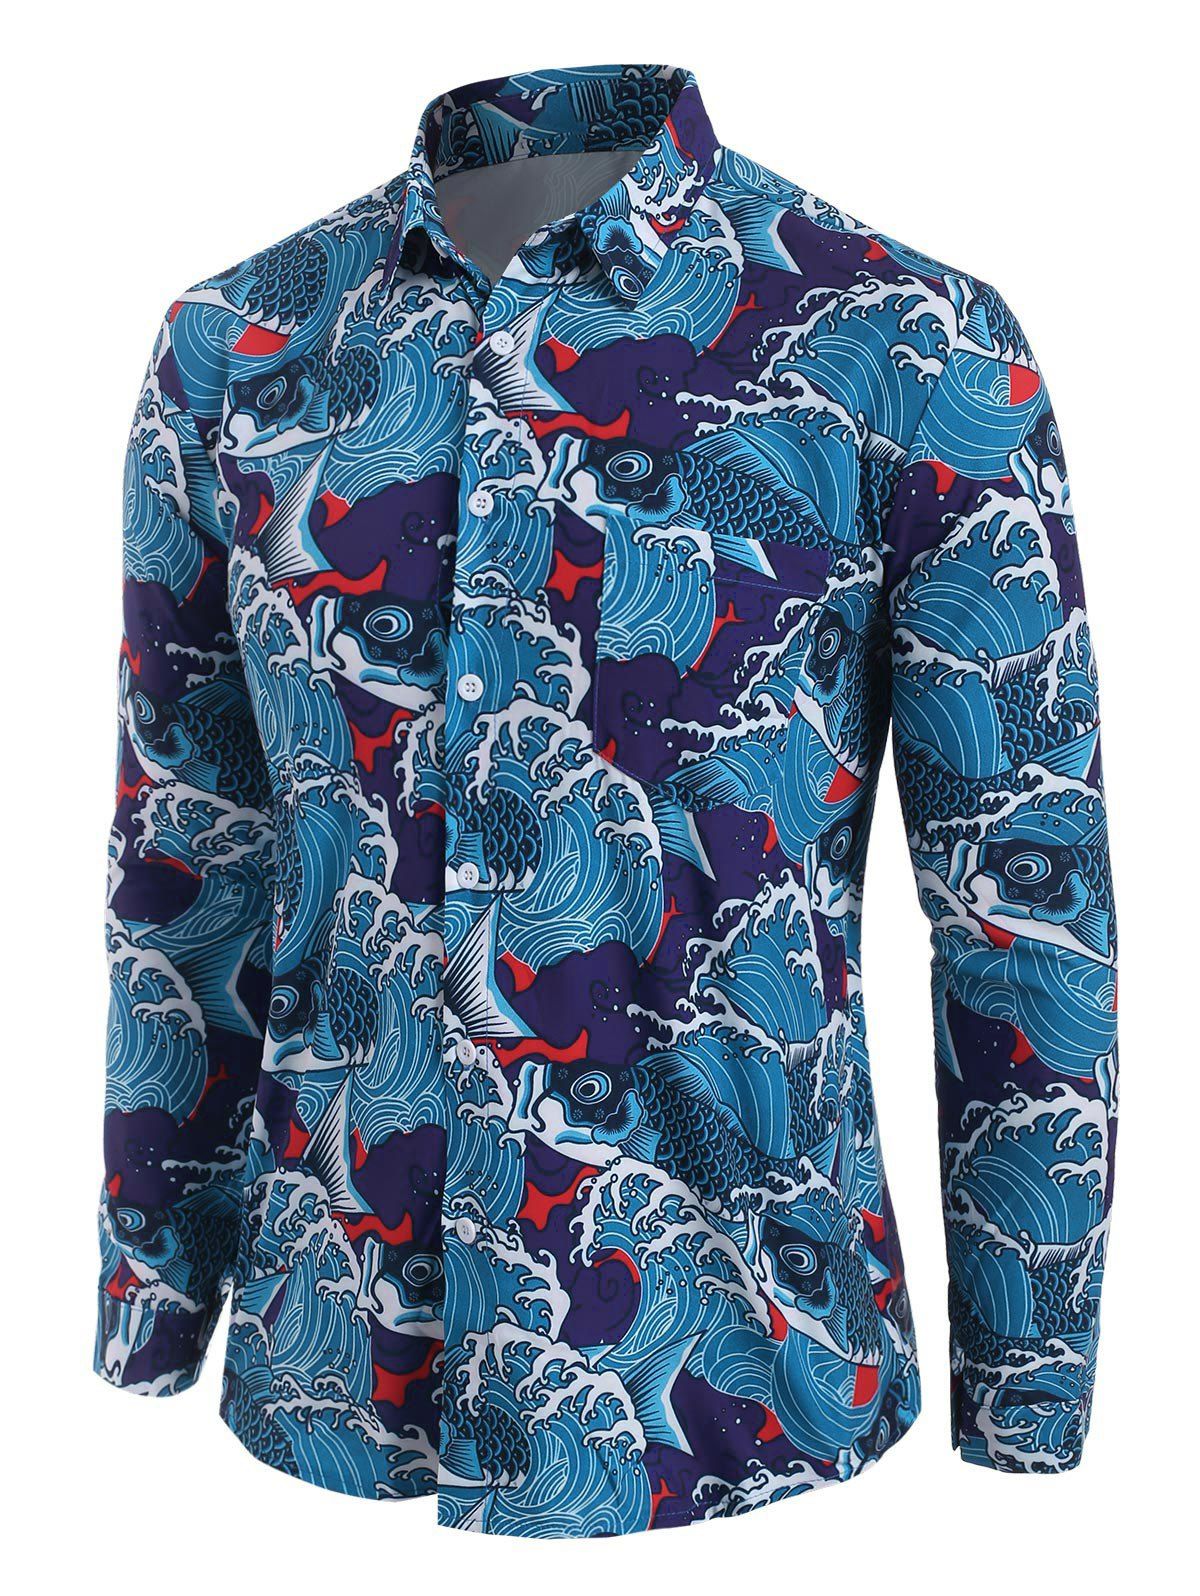 Sea Waves Fish Print Pocket Button Up Shirt - SILK BLUE 2XL